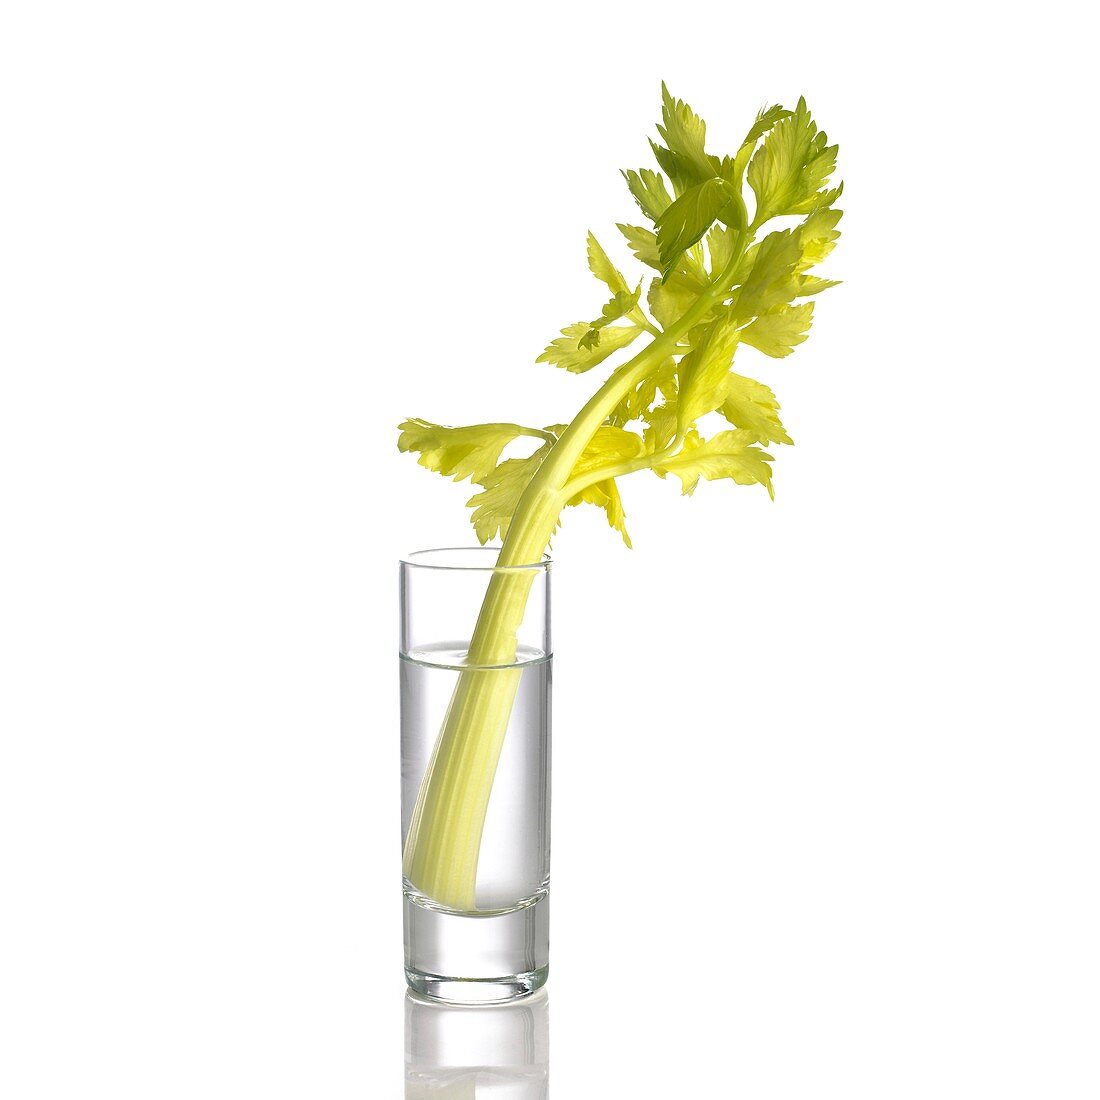 Celery stalk in a glass of water